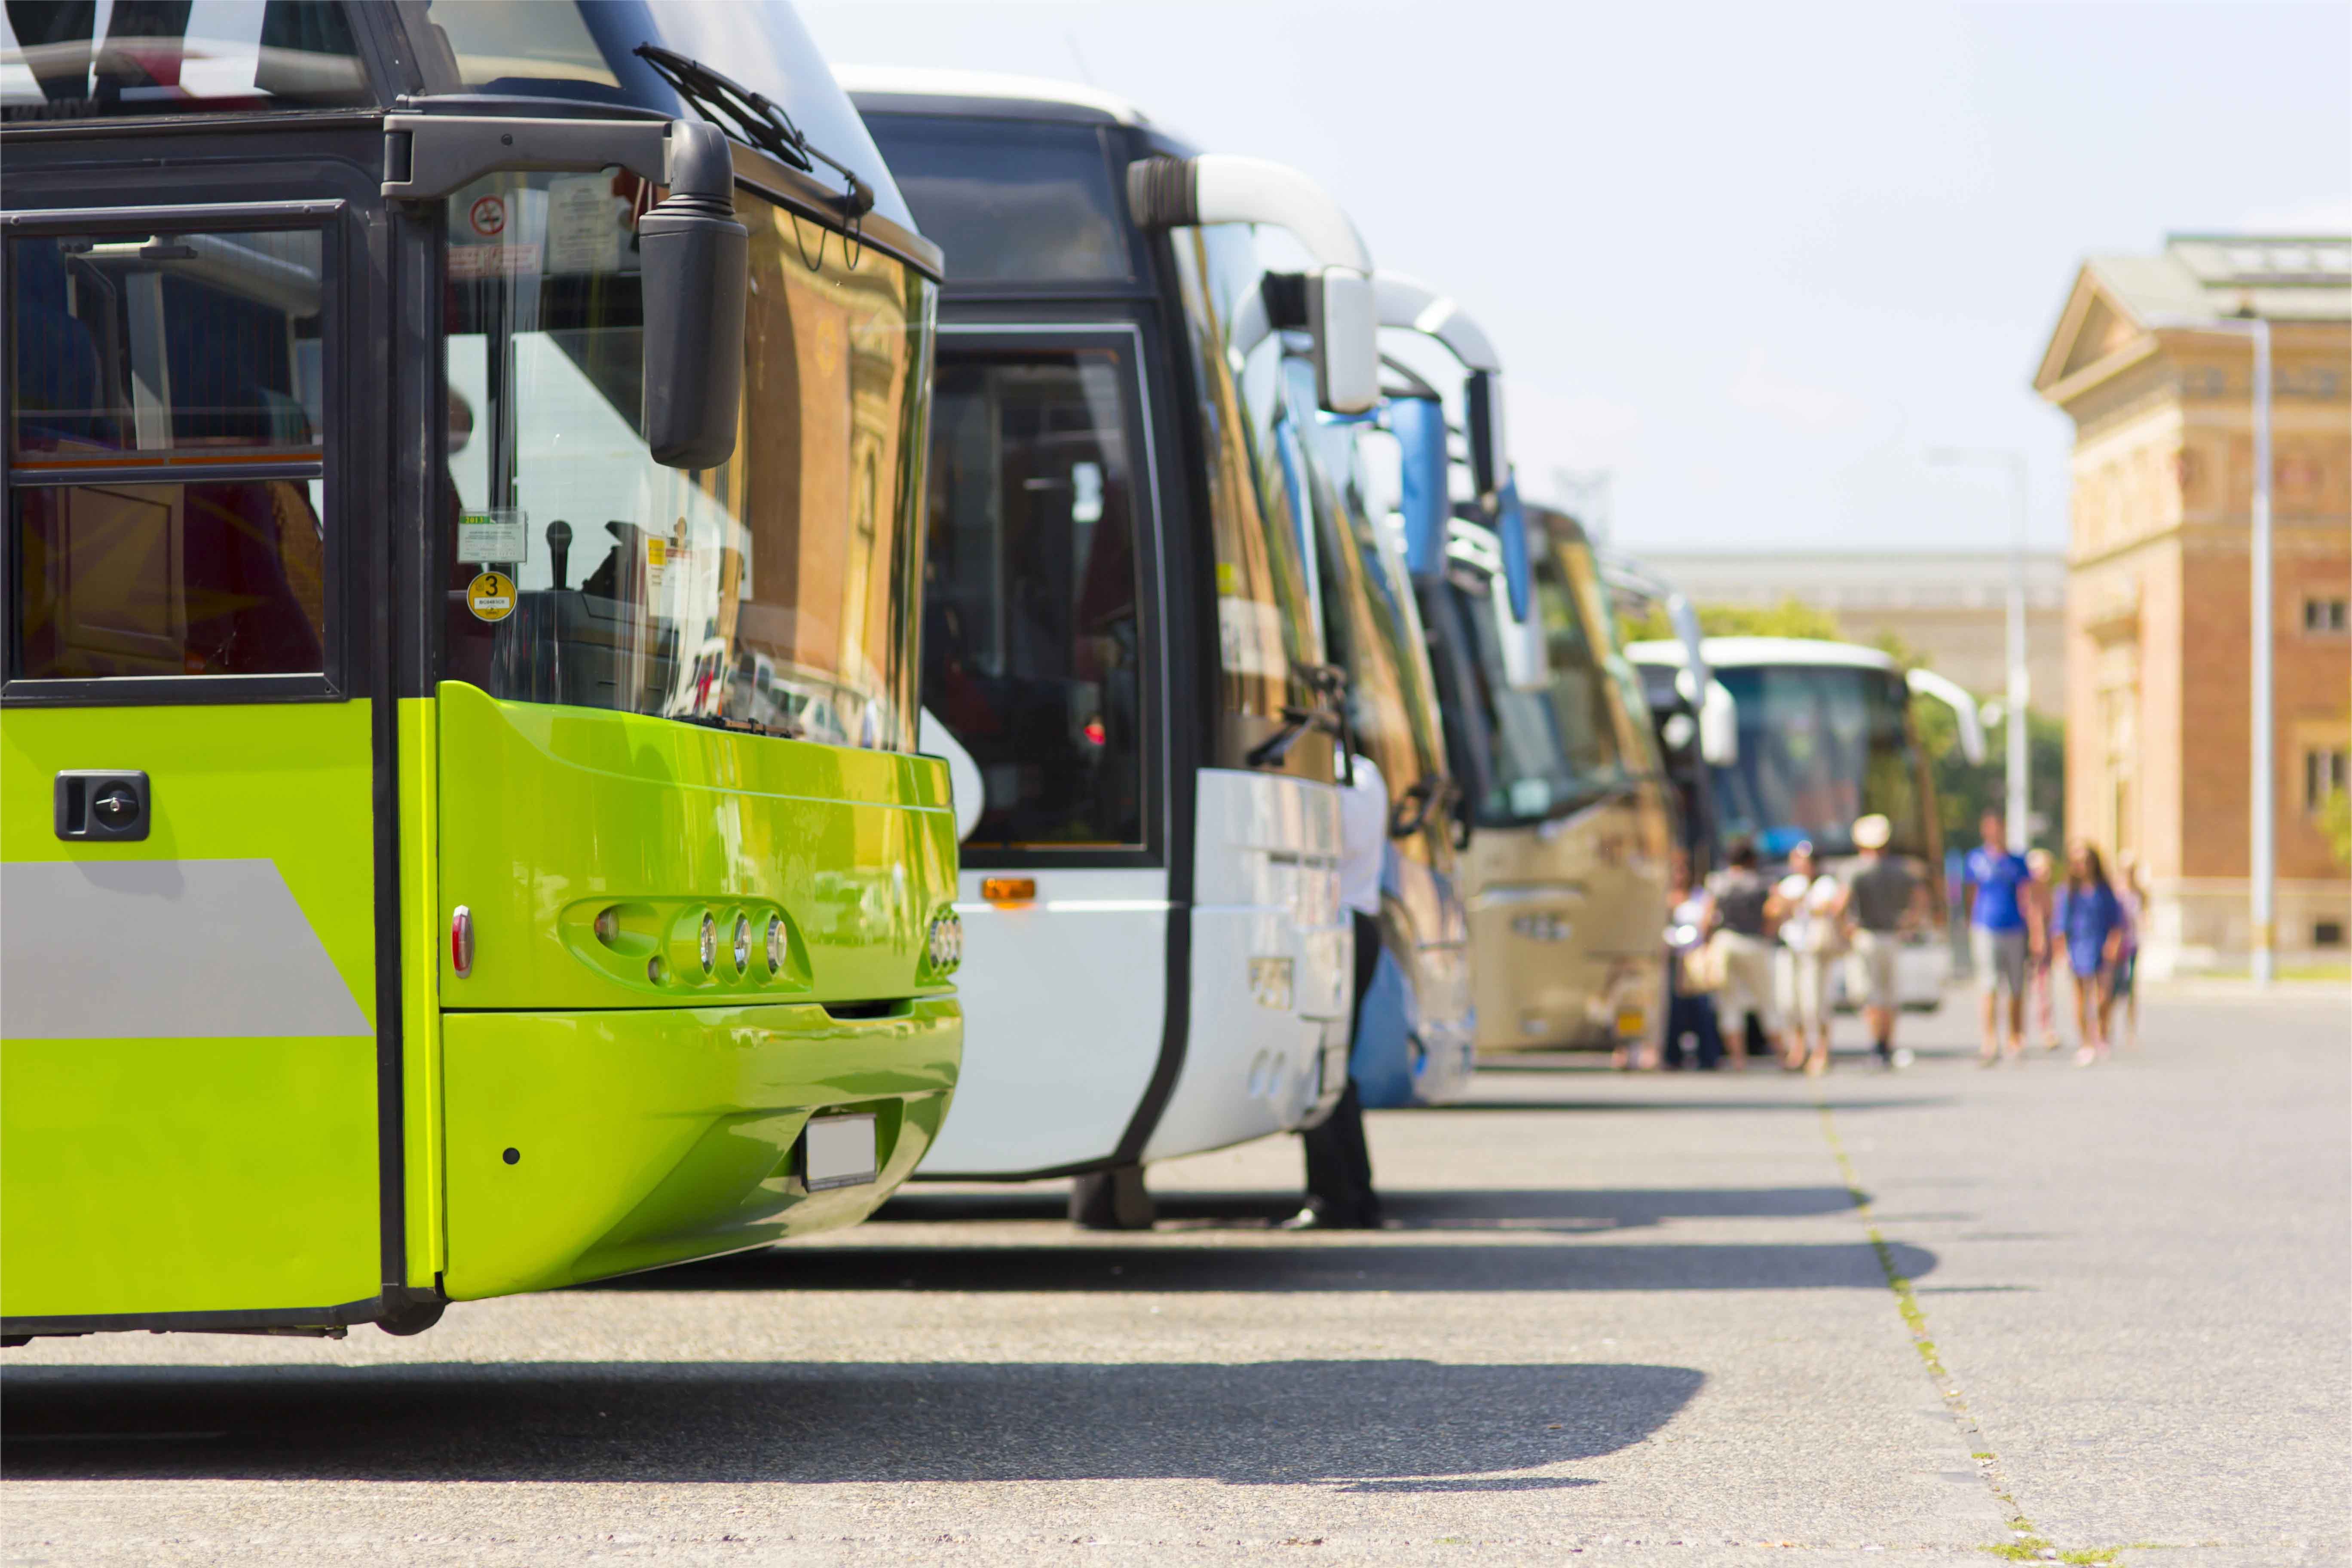 European City Buses Go Green: 42% Now Zero-Emission, Report Shows